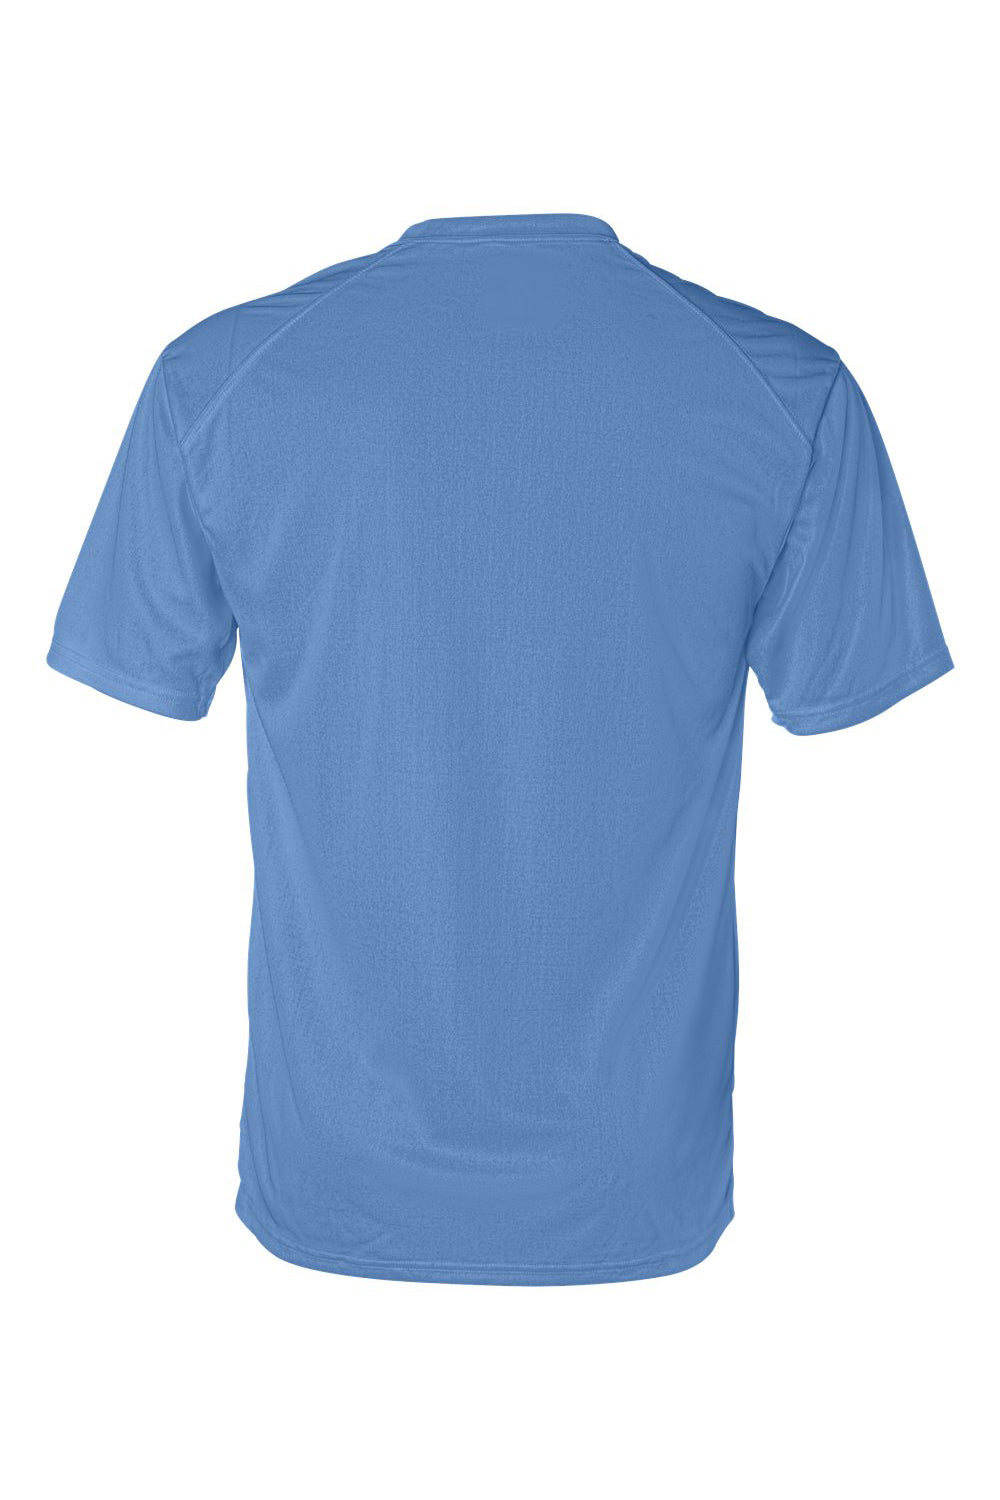 Badger 4120 Mens B-Core Moisture Wicking Short Sleeve Crewneck T-Shirt Columbia Blue Flat Back